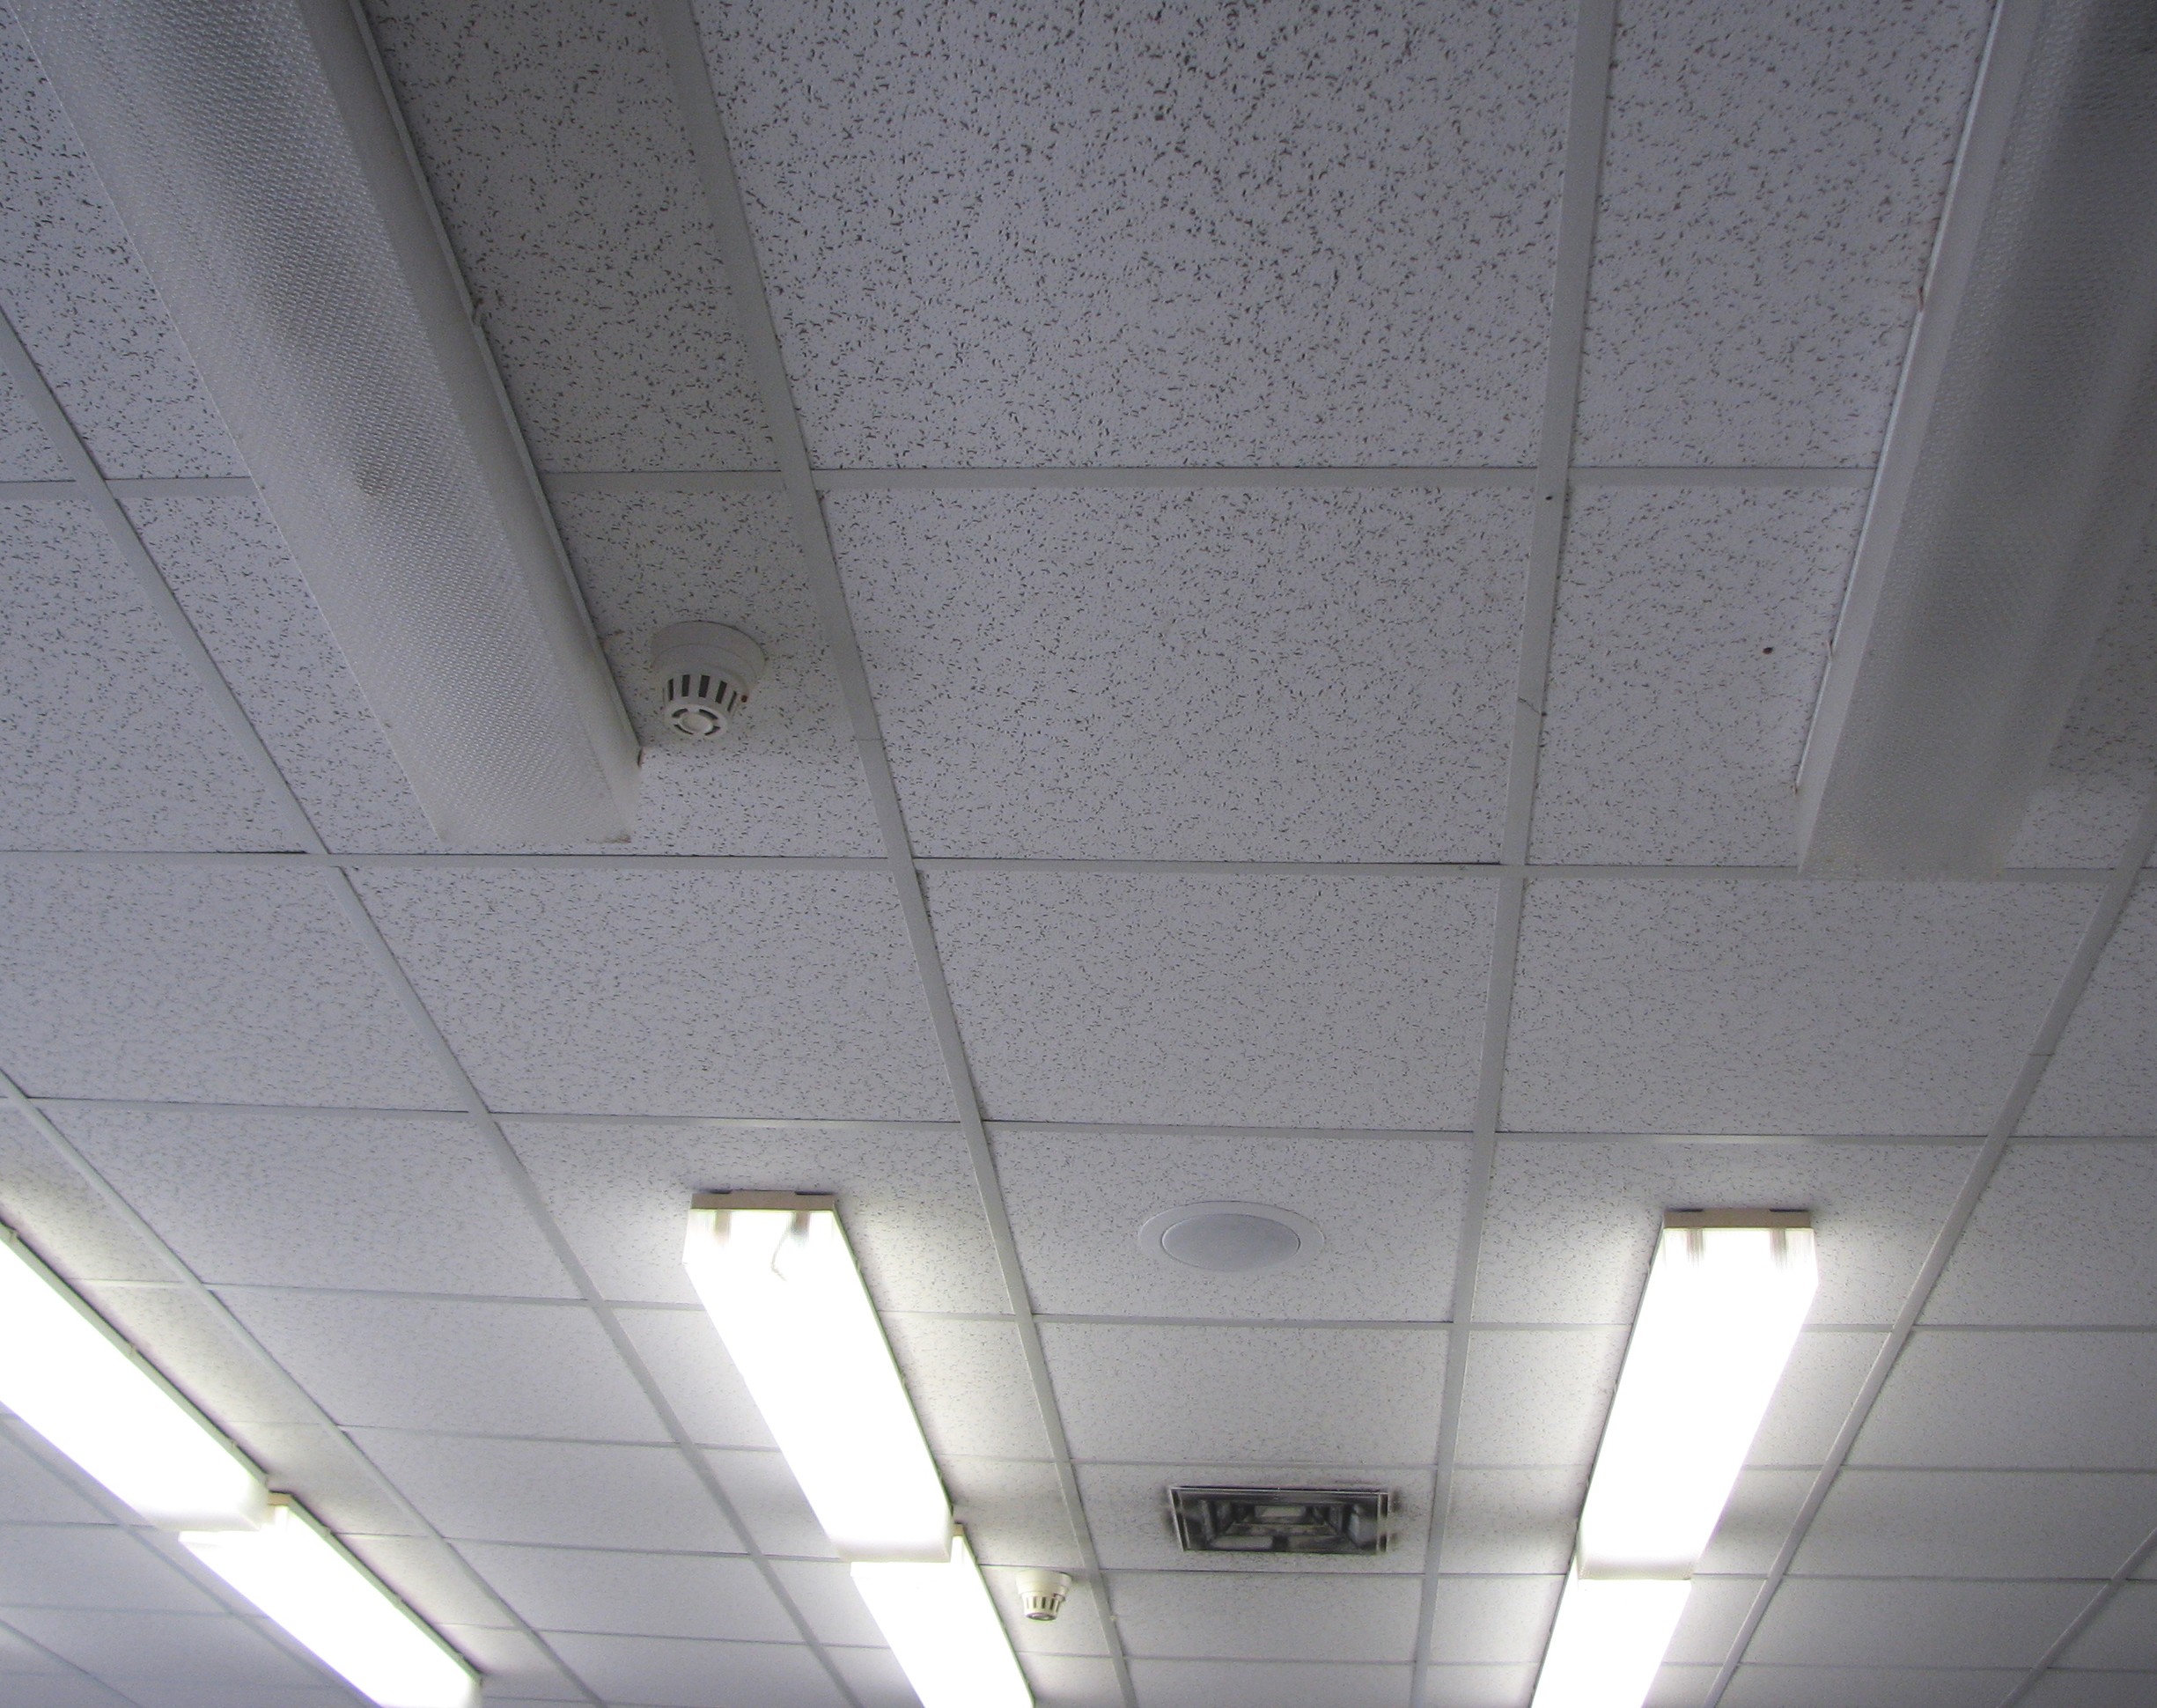 2x2 led ceiling lights photo - 1